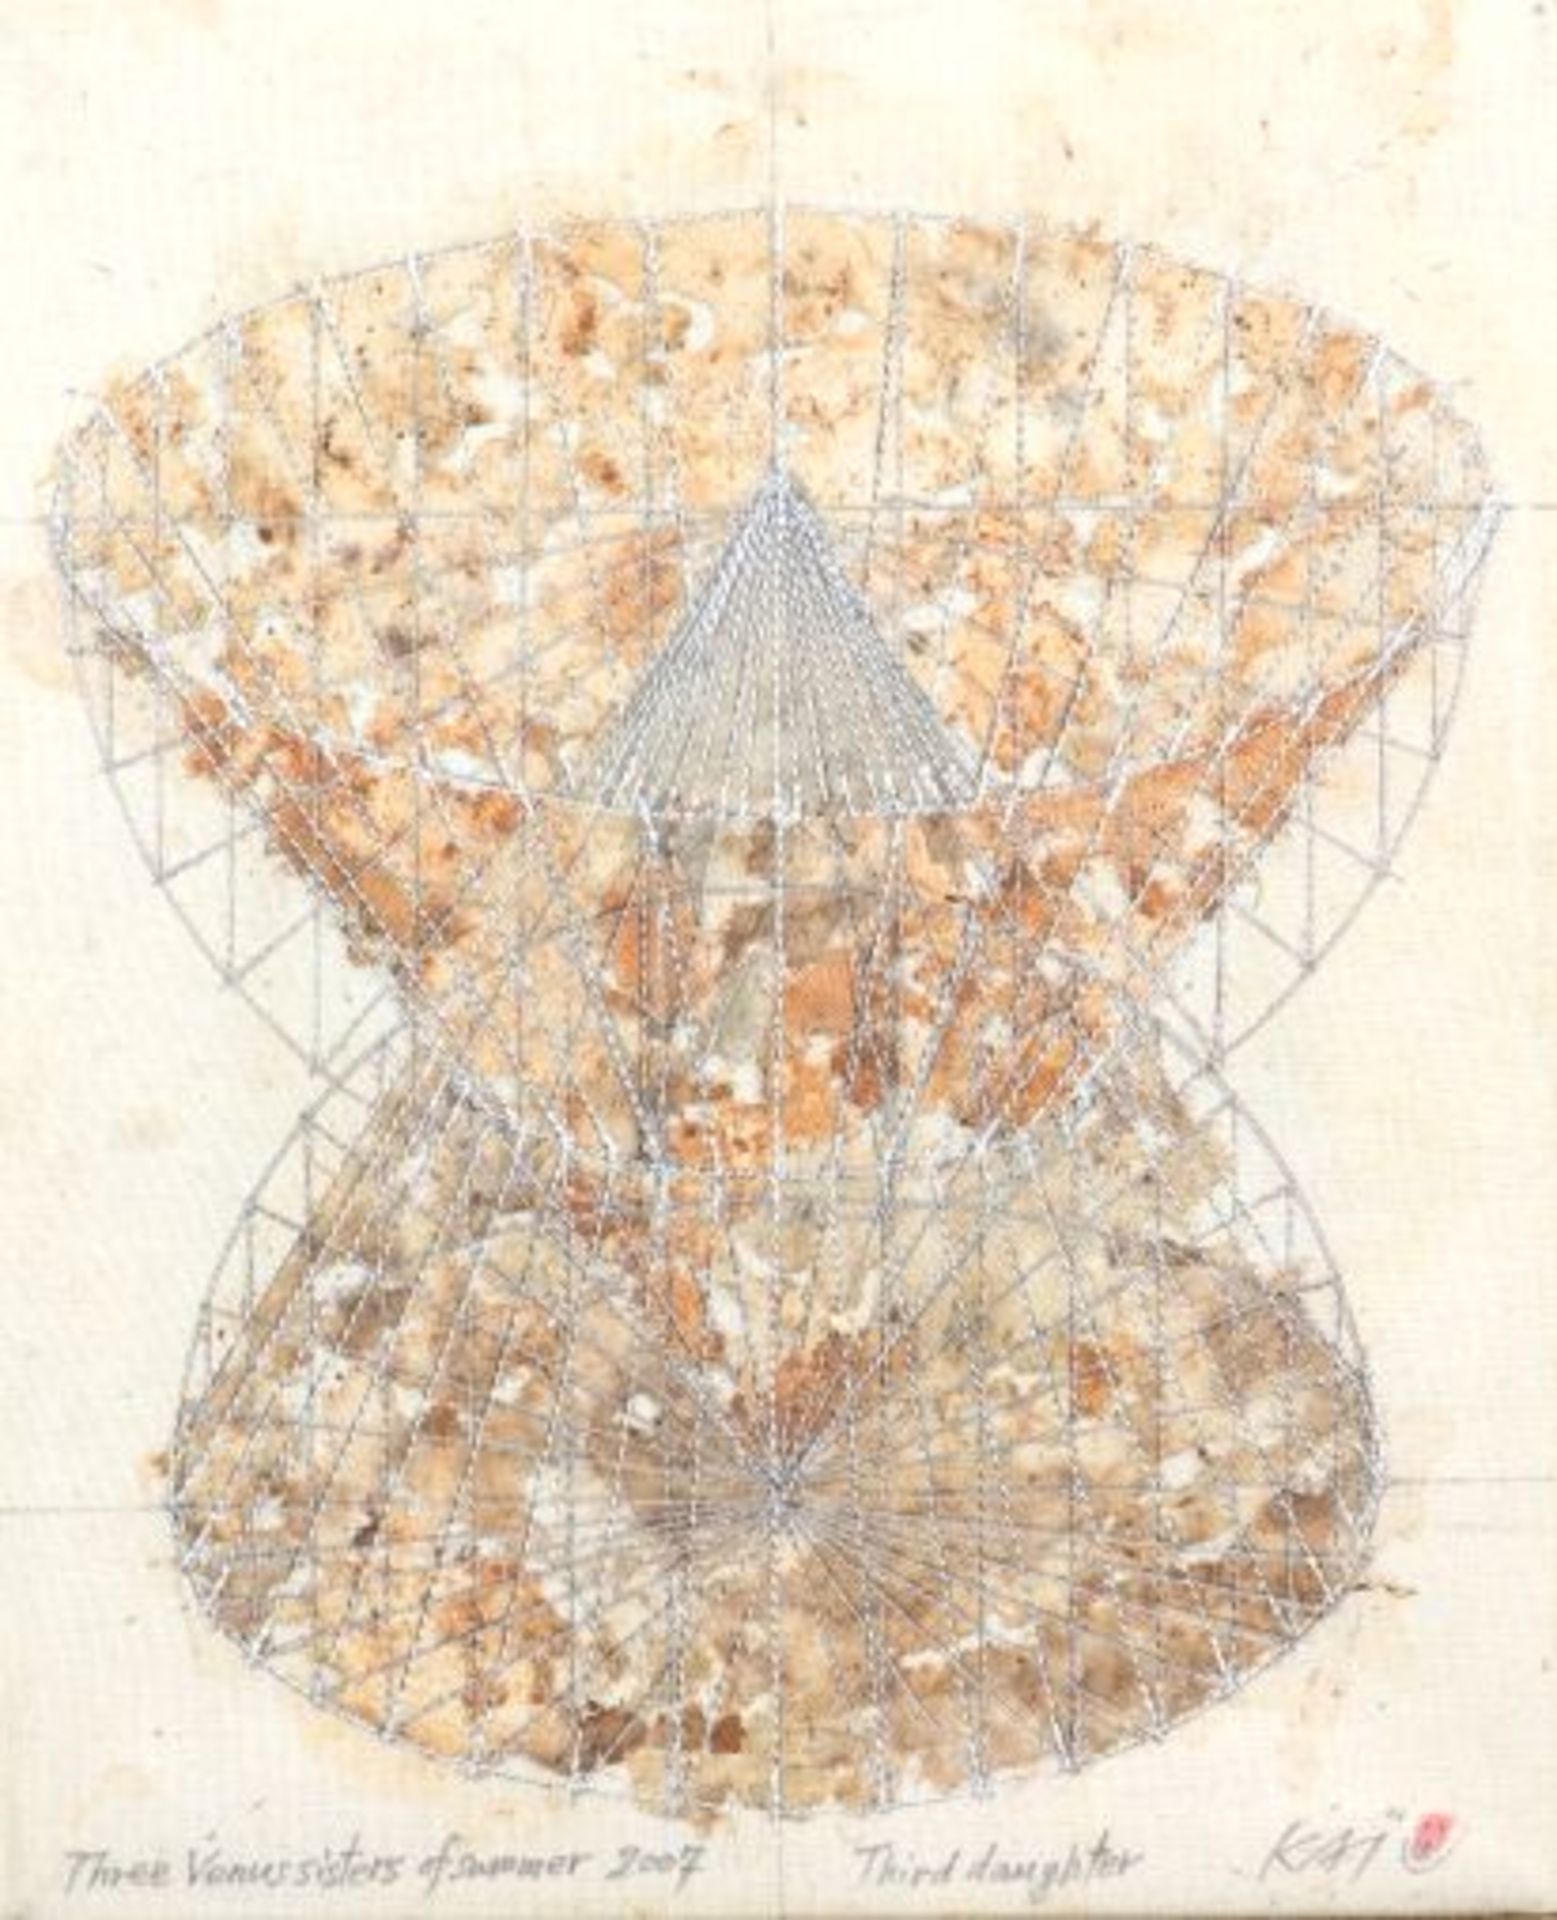 Masayuki KAI (1958). - Three Venus sisters of summer - 2007. - Chutes de textiles [...]